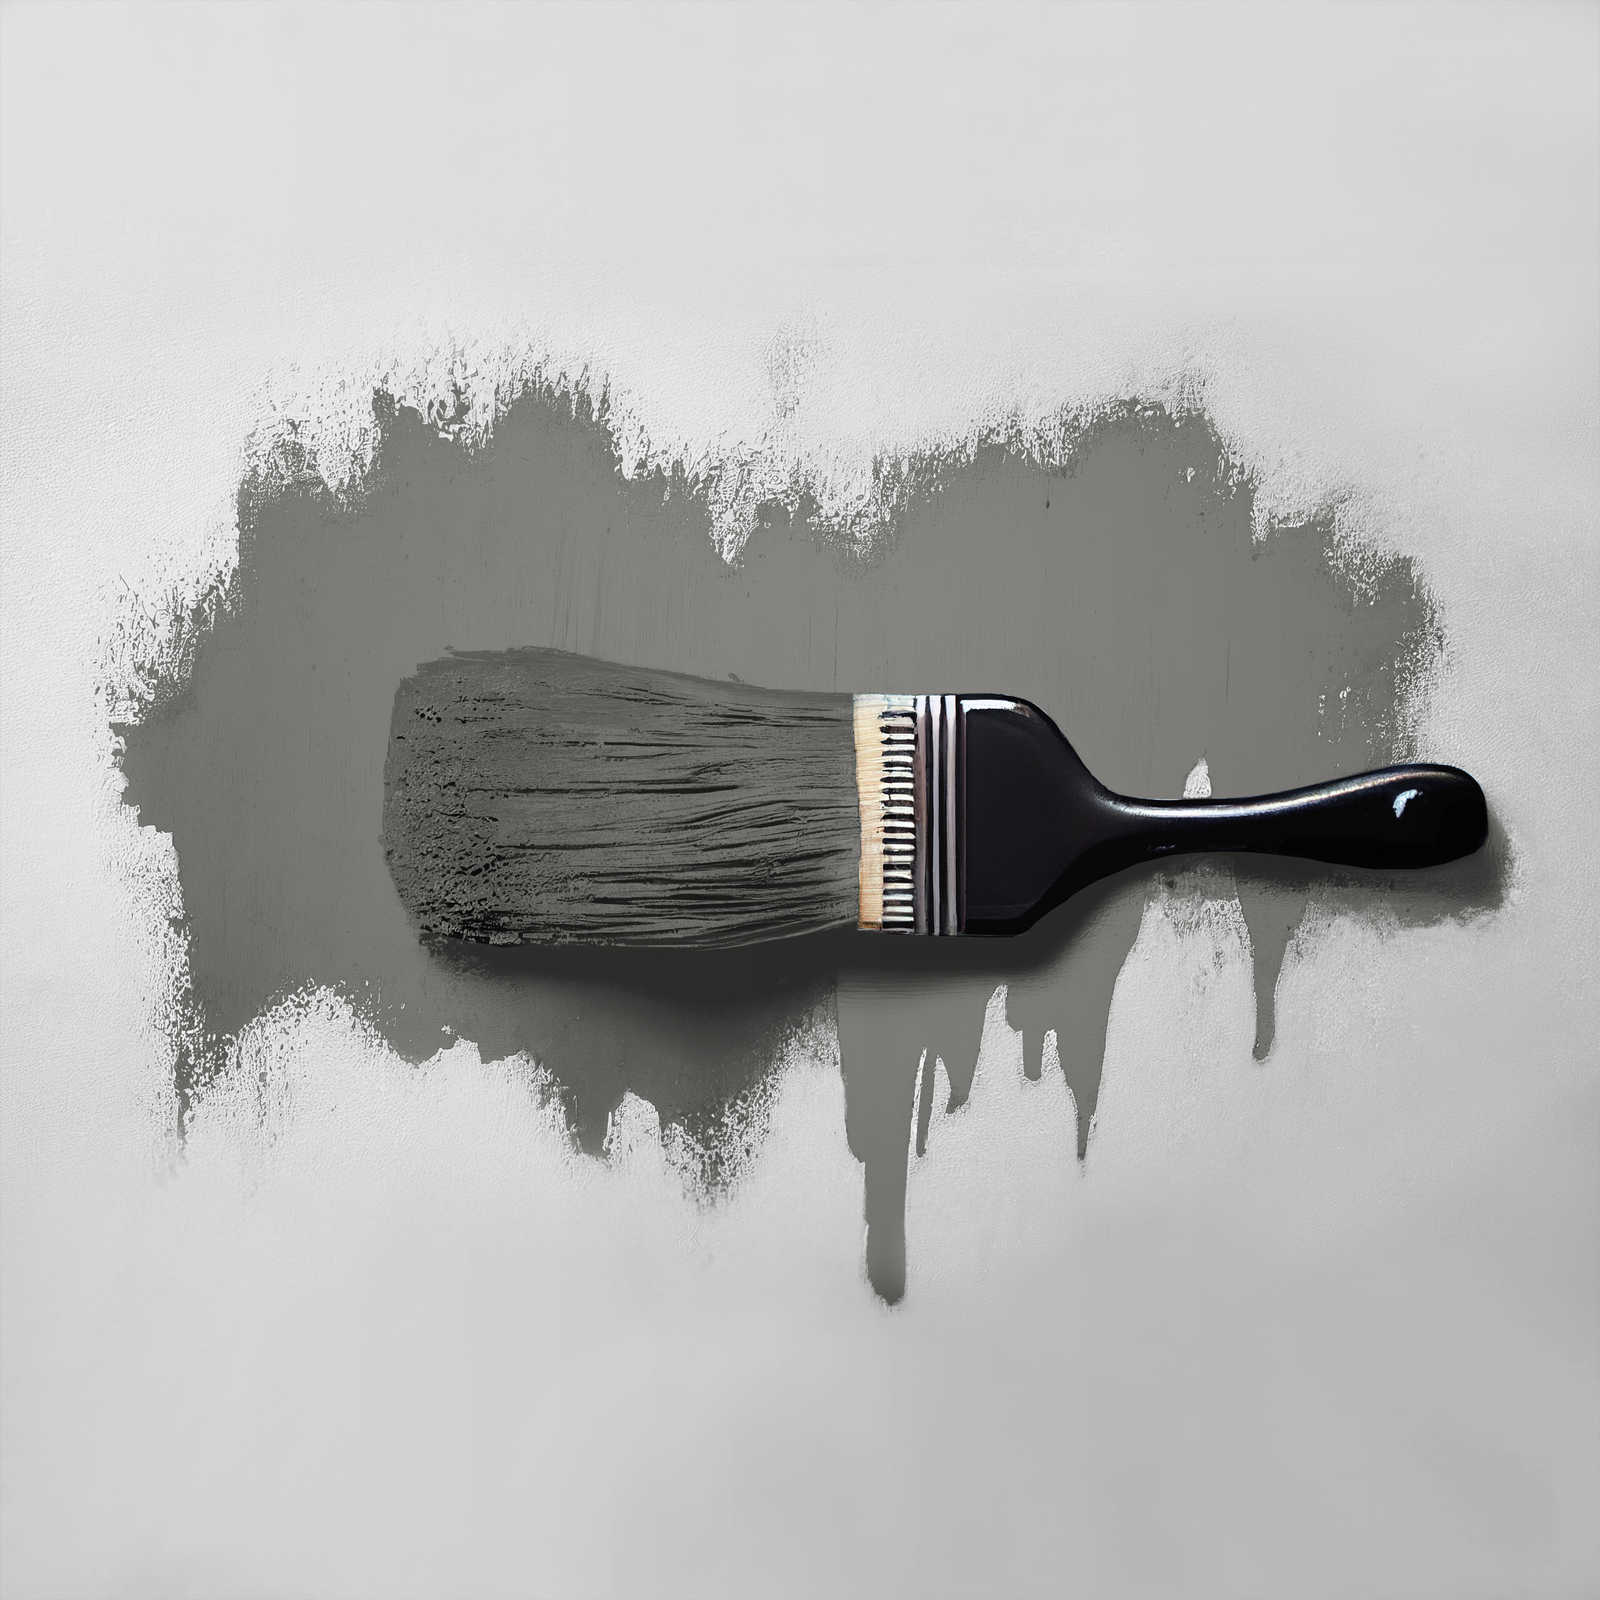             Pittura murale TCK1013 »Poised Pepper« in grigio scuro – 2,5 litri
        